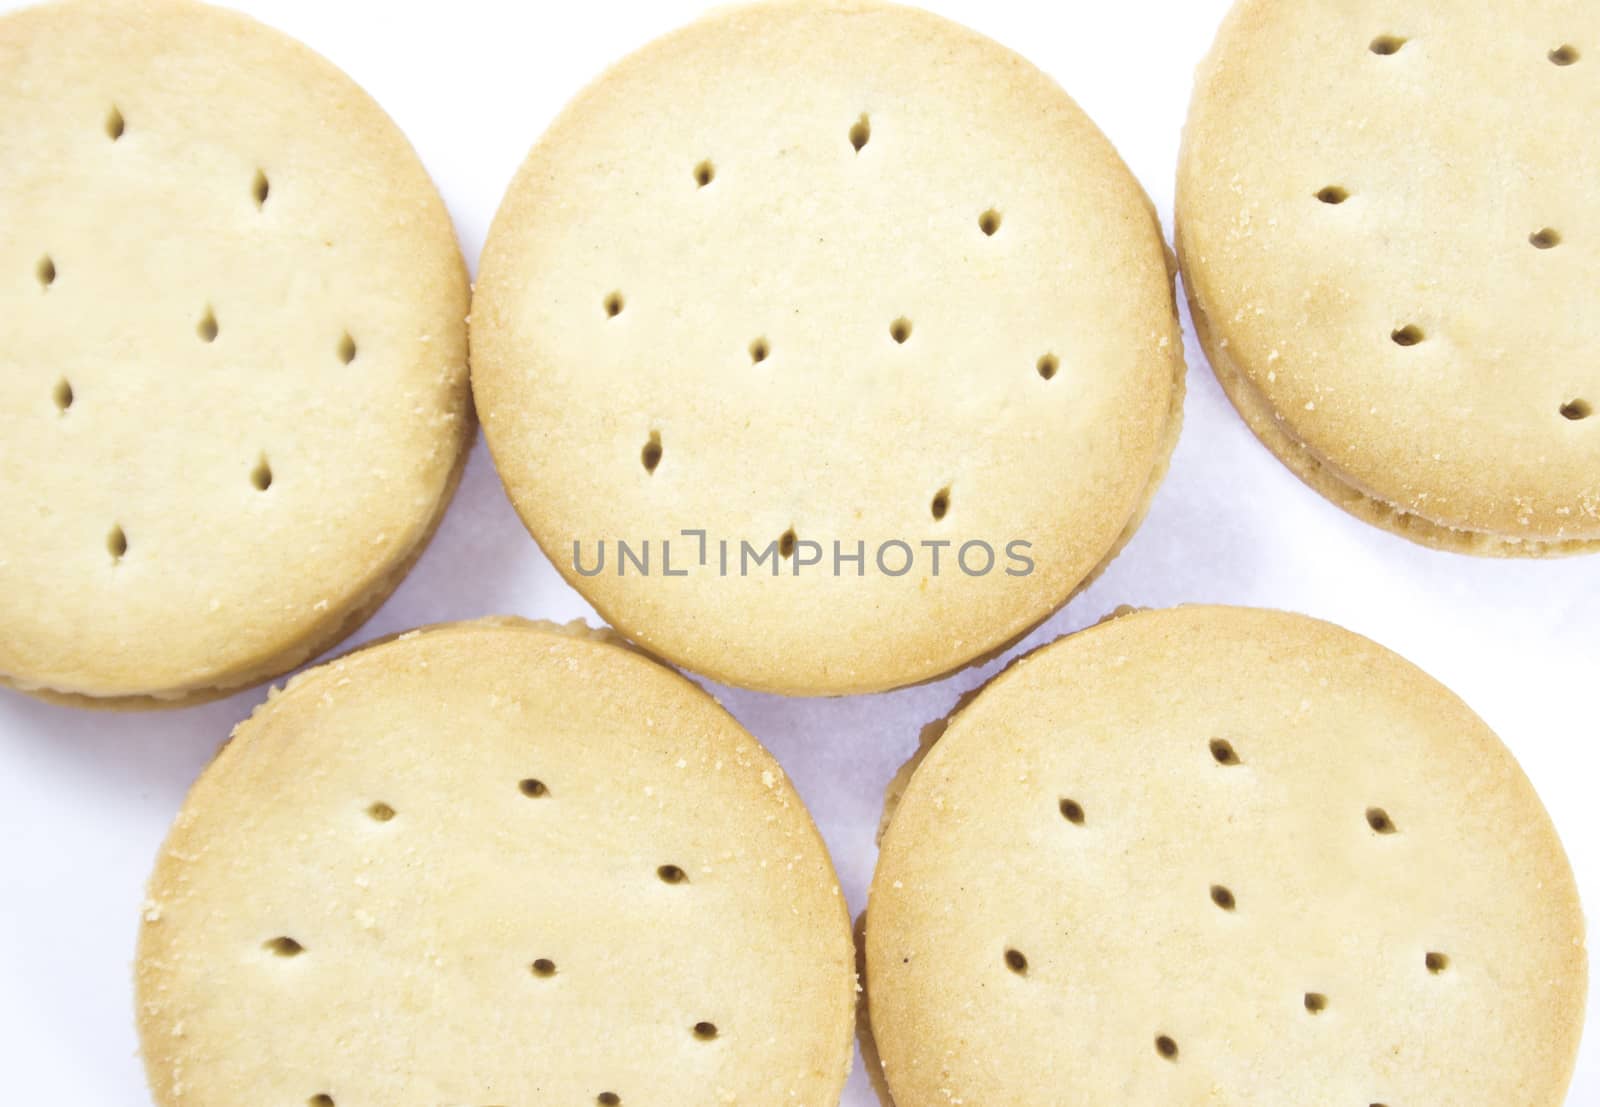 Sandwich biscuits by designsstock